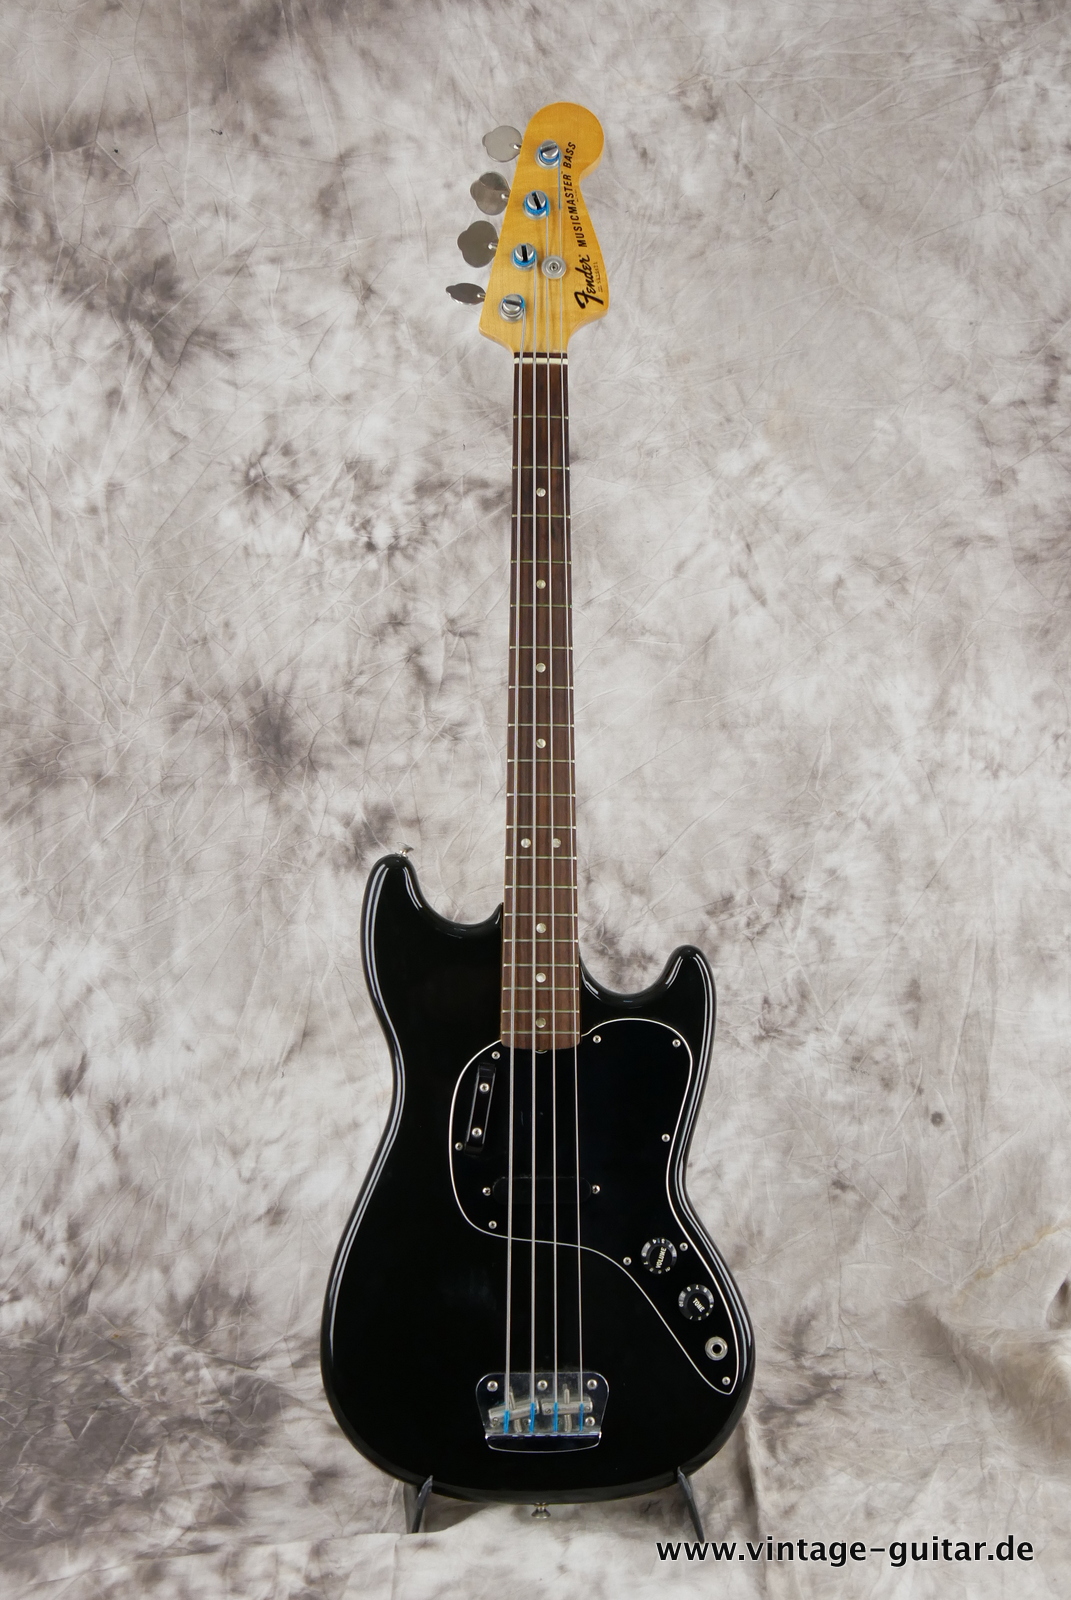 Fender_Musicmaster_bass_short_scale_1977_black-001.JPG